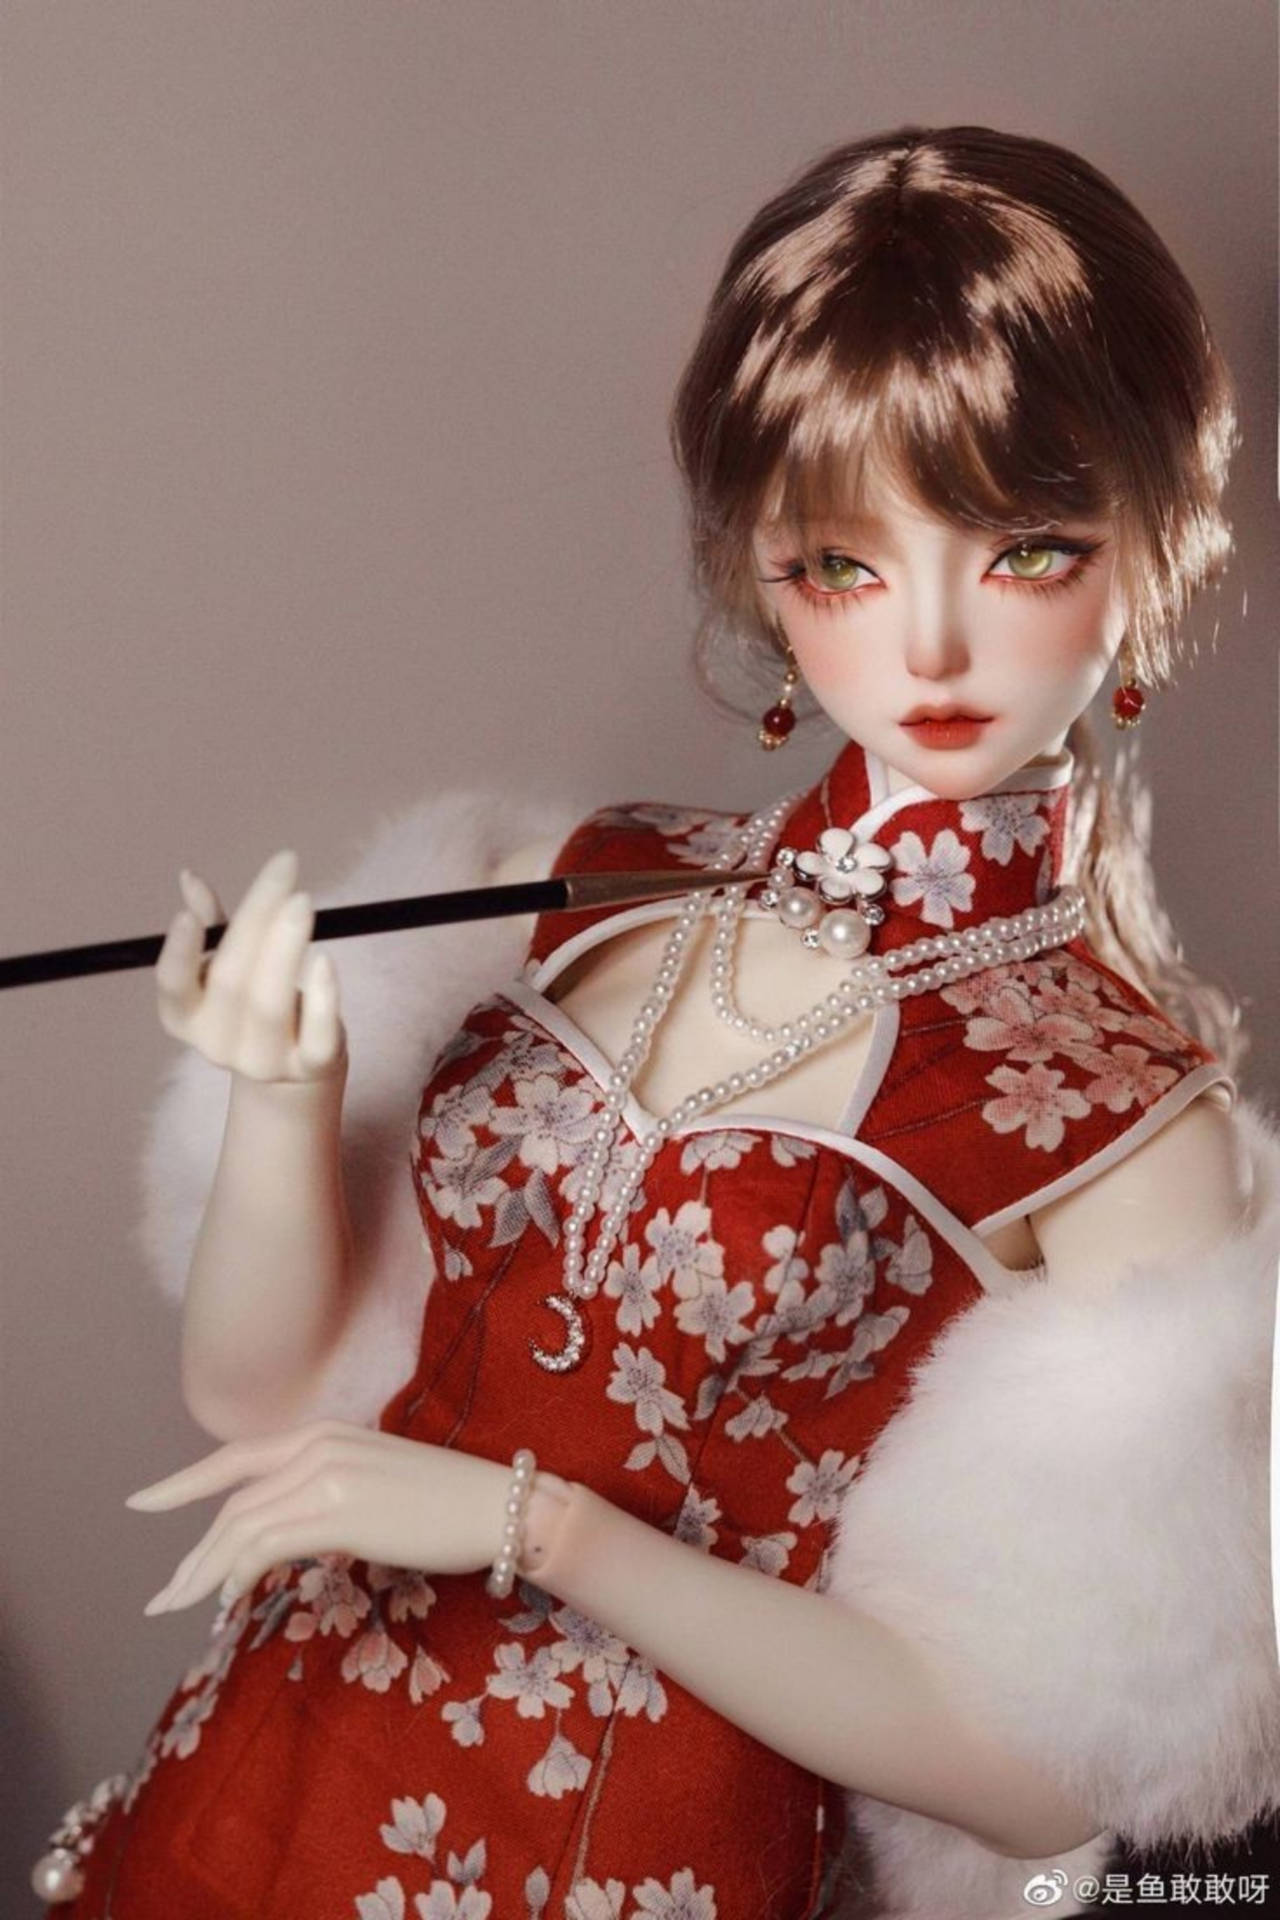 Barbie Doll In Cheongsam Background